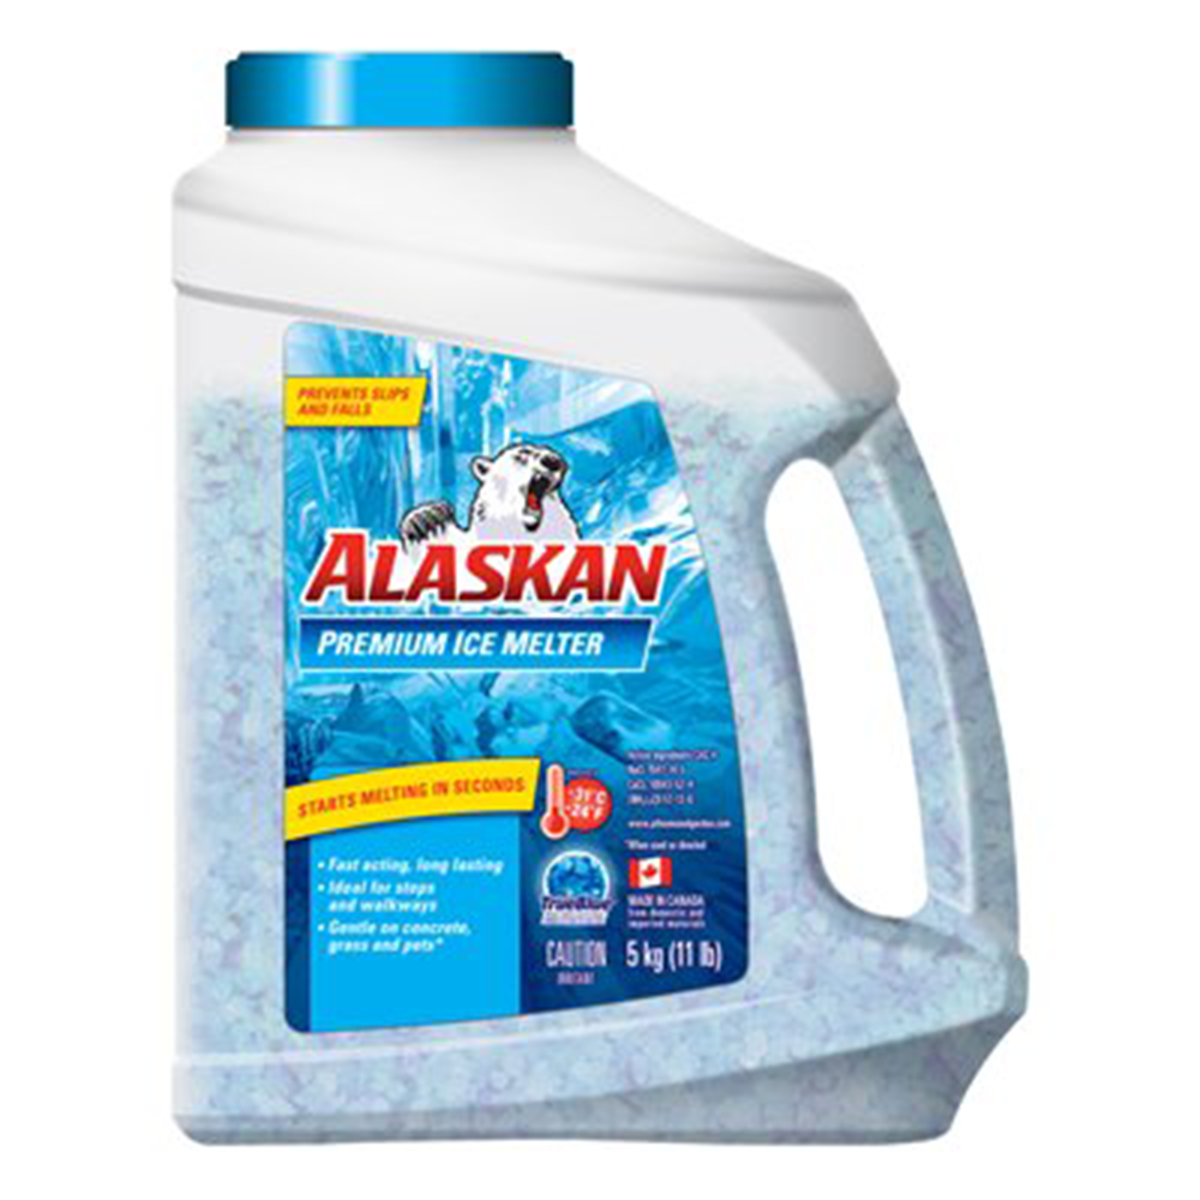 Alaskan Ice Melt 4.5kg jug